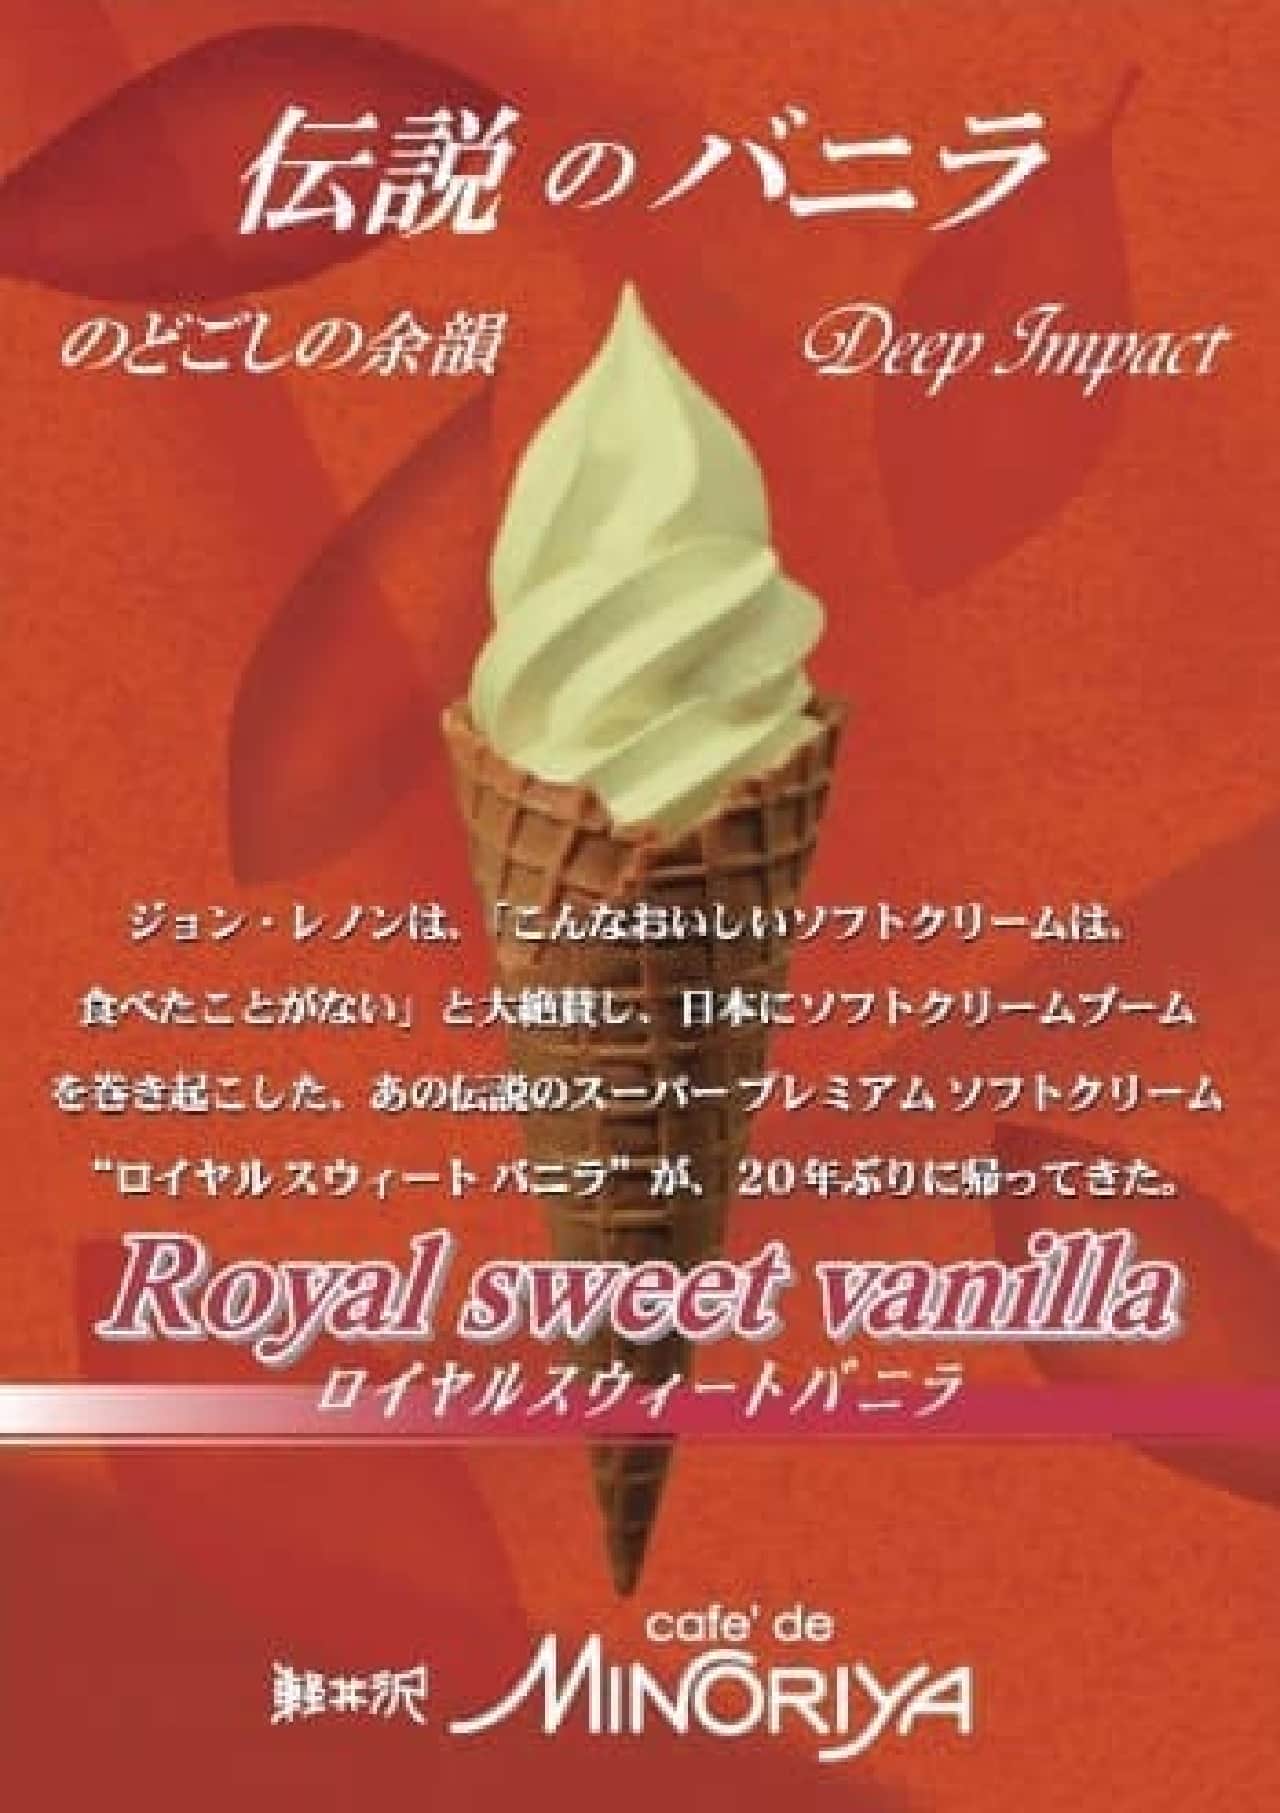 Soft serve ice cream specialty store "Karuizawa Cafe de Minoriya"